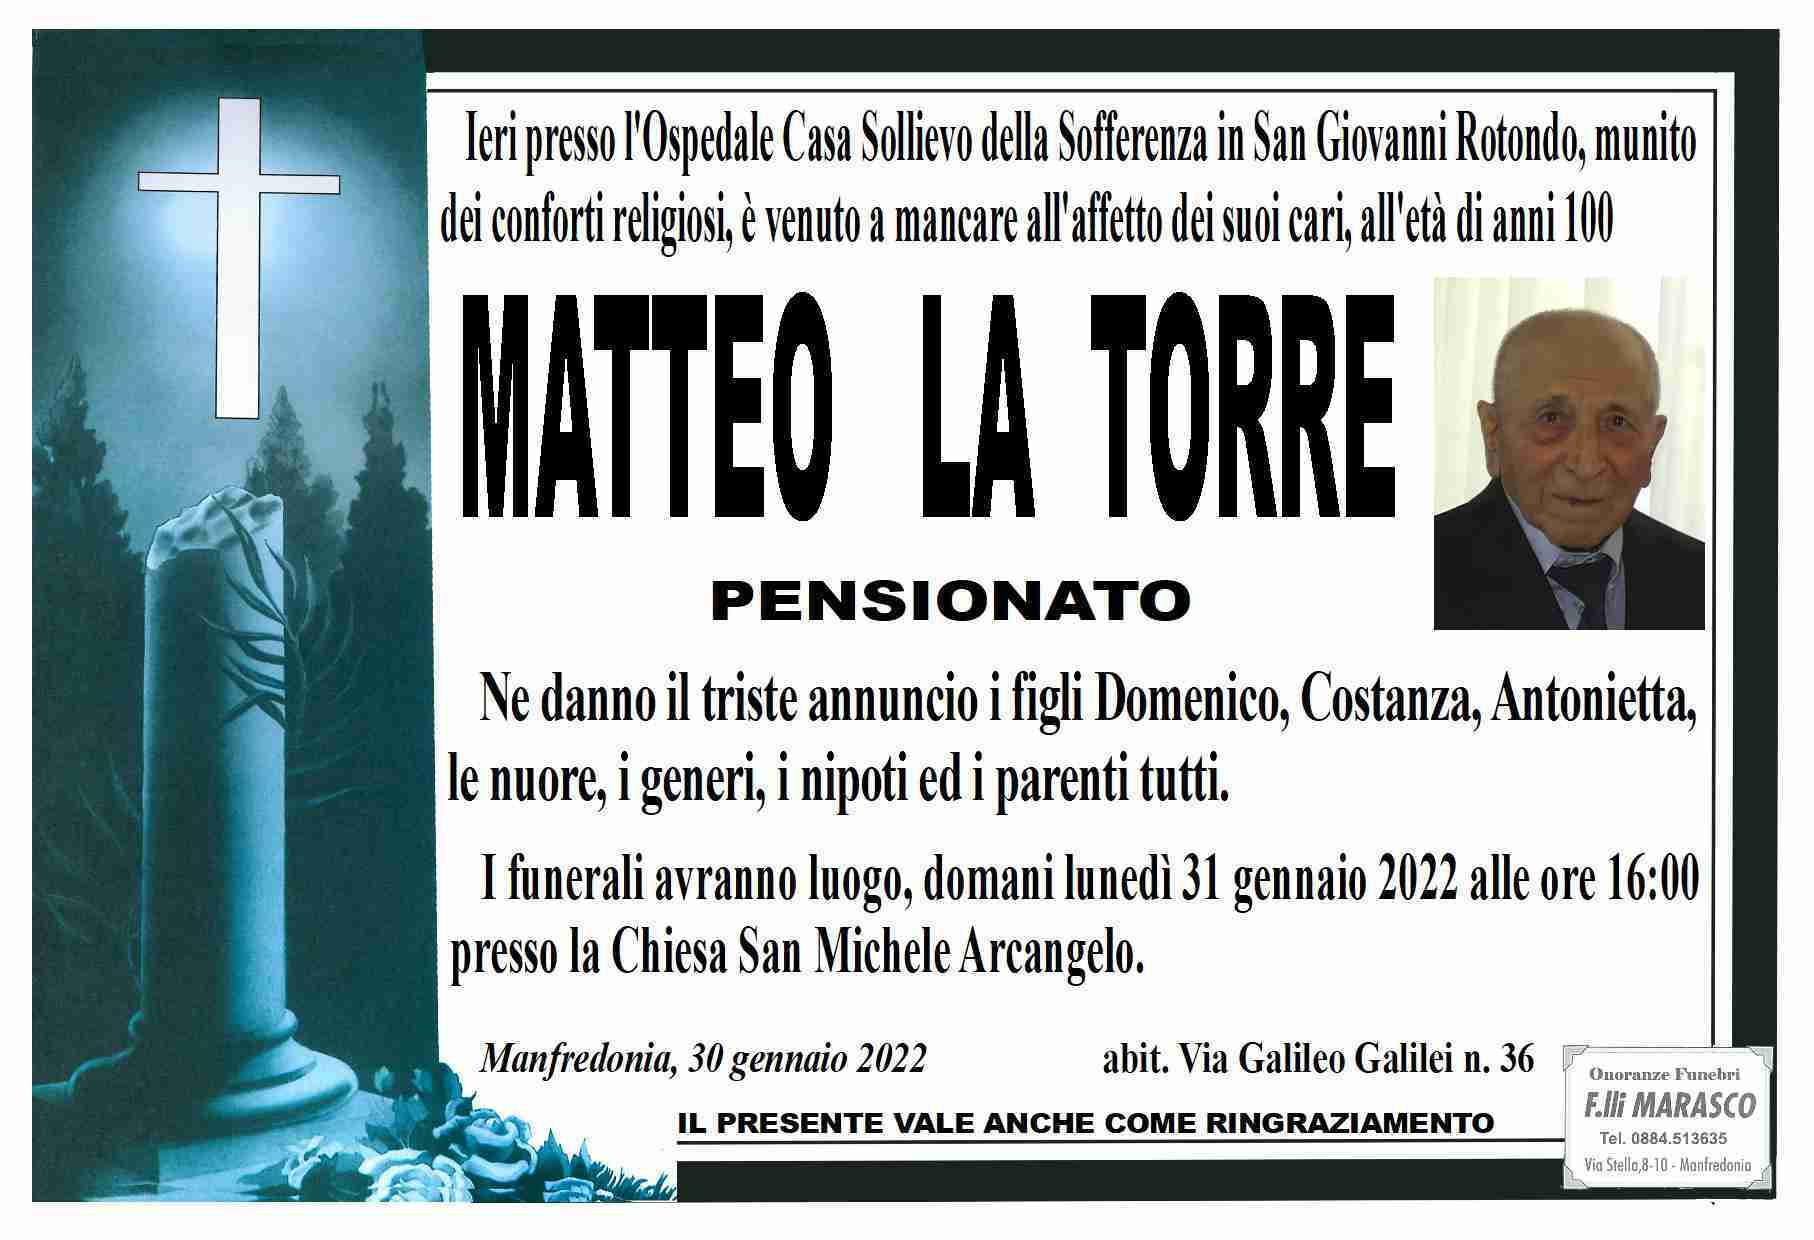 Matteo La Torre